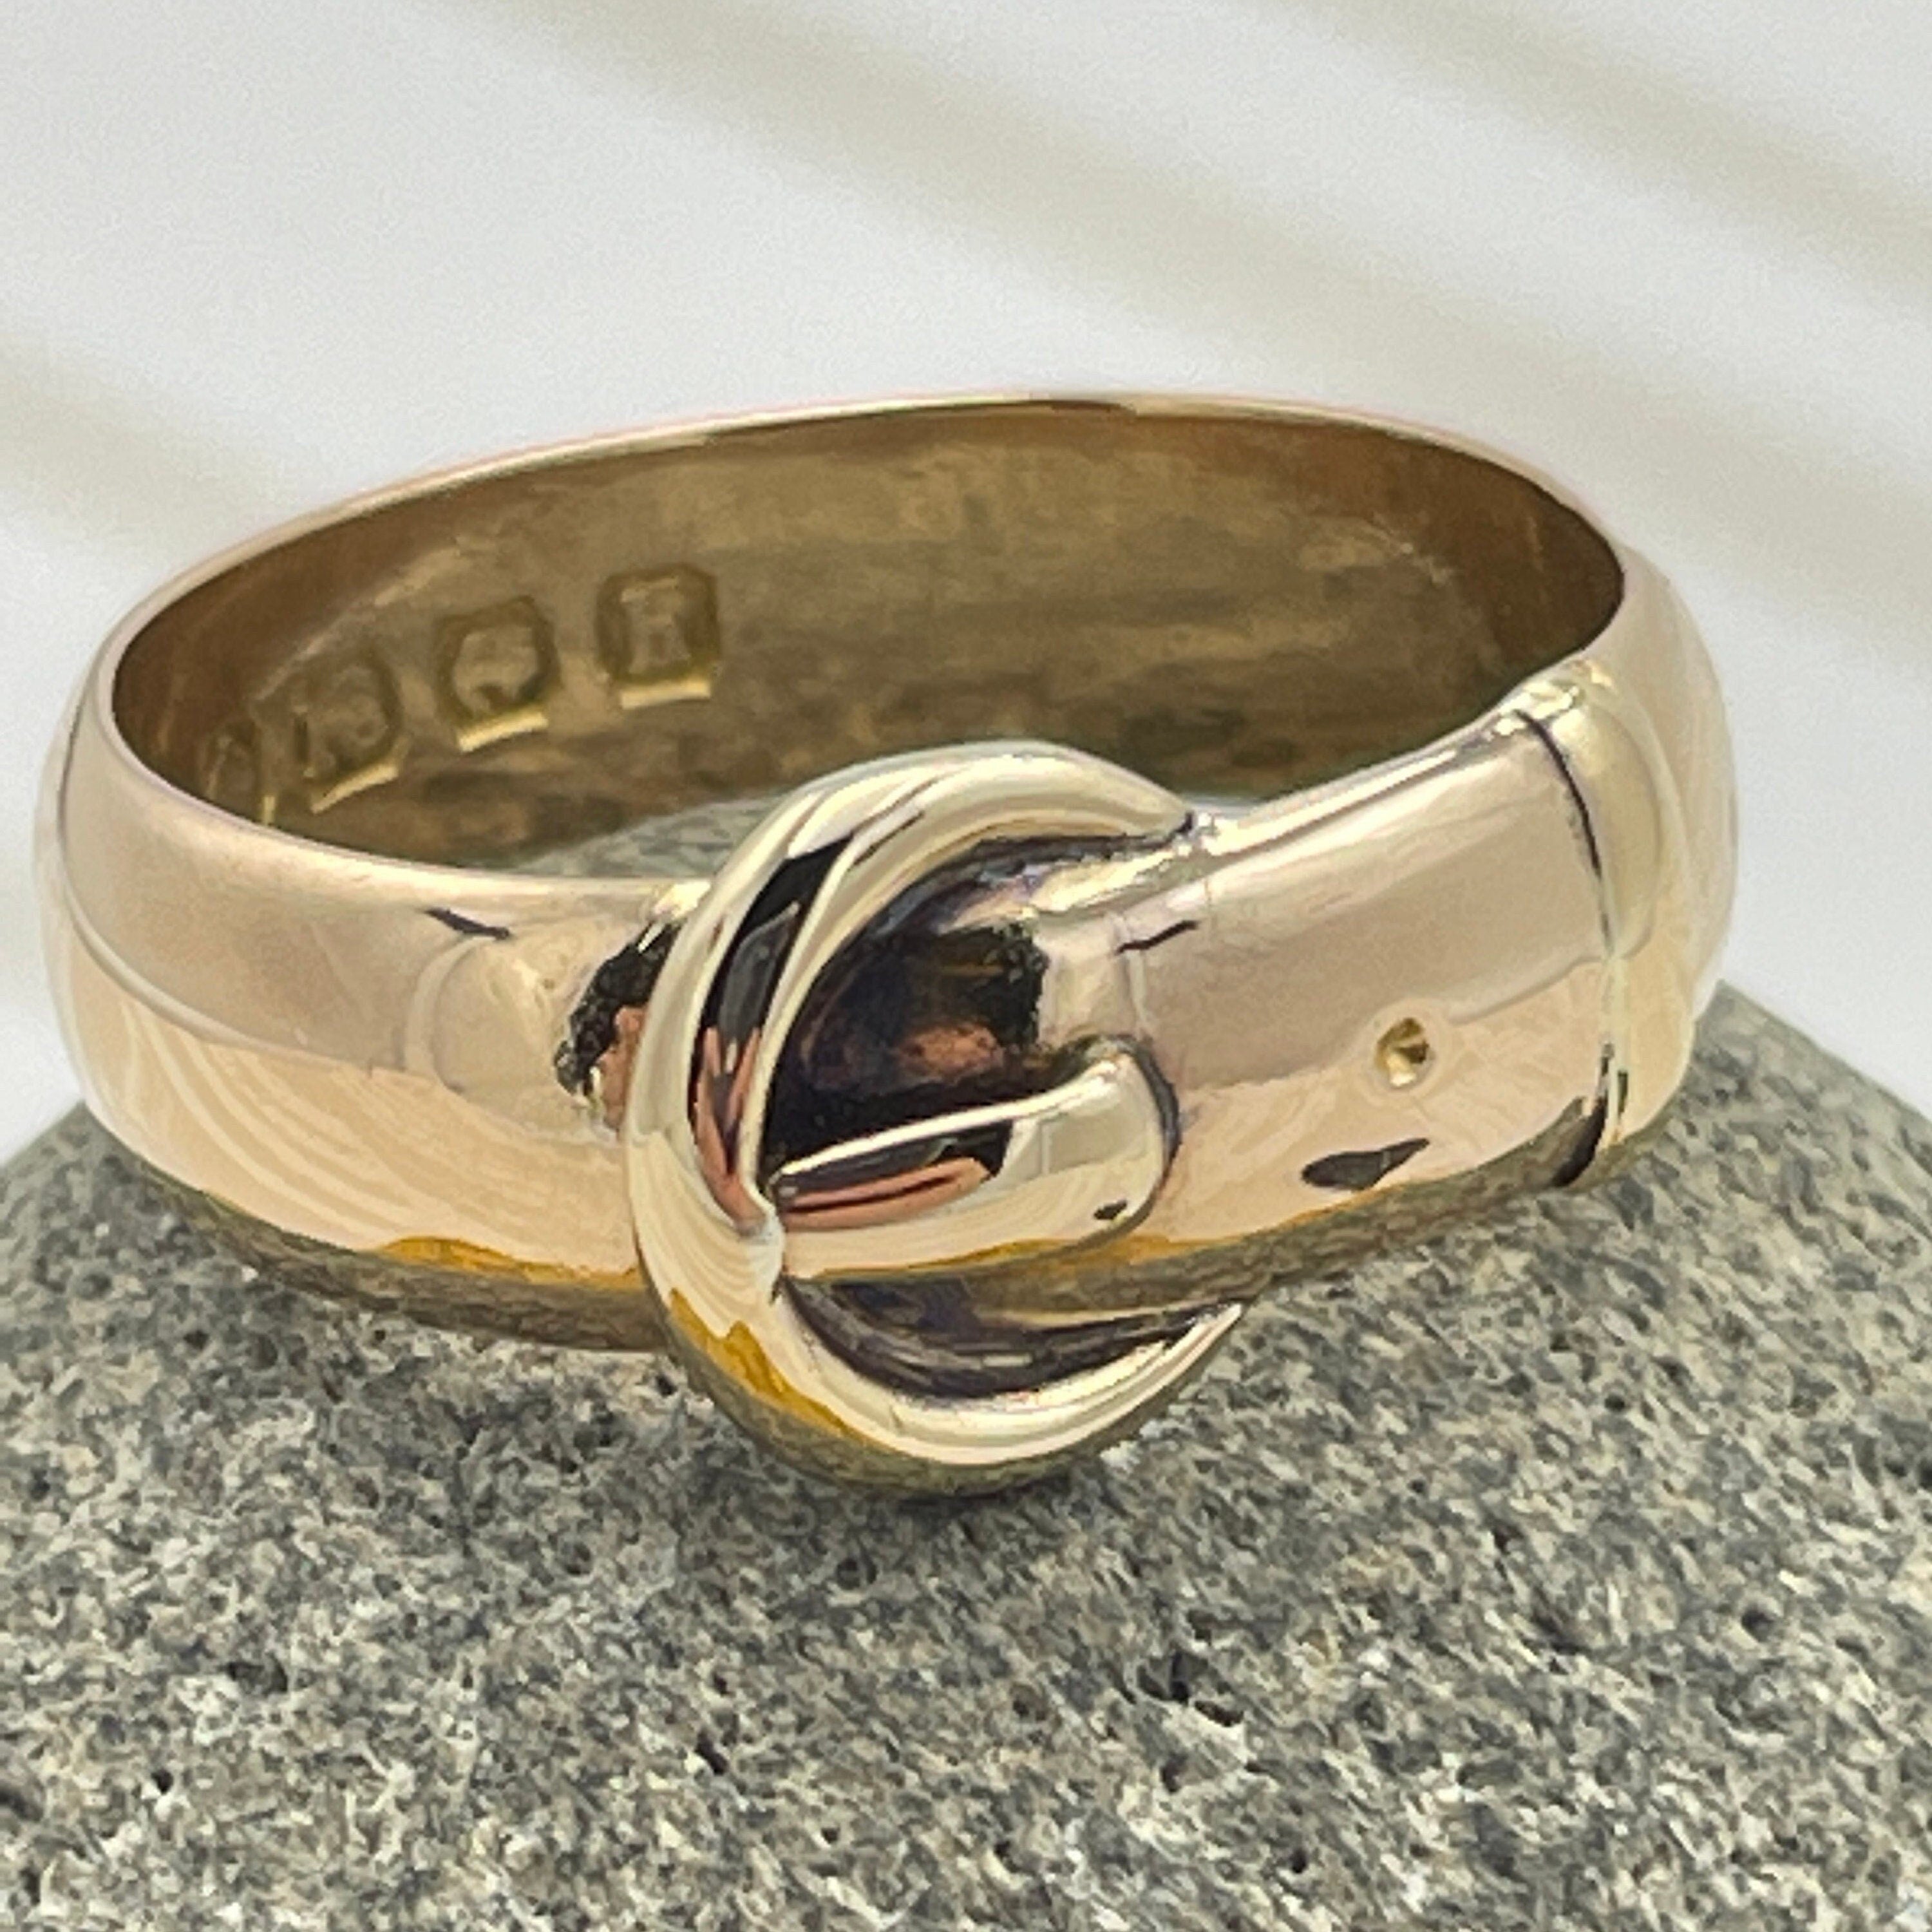 Edwardian 18ct gold, gents heavy buckle wedding band ring,